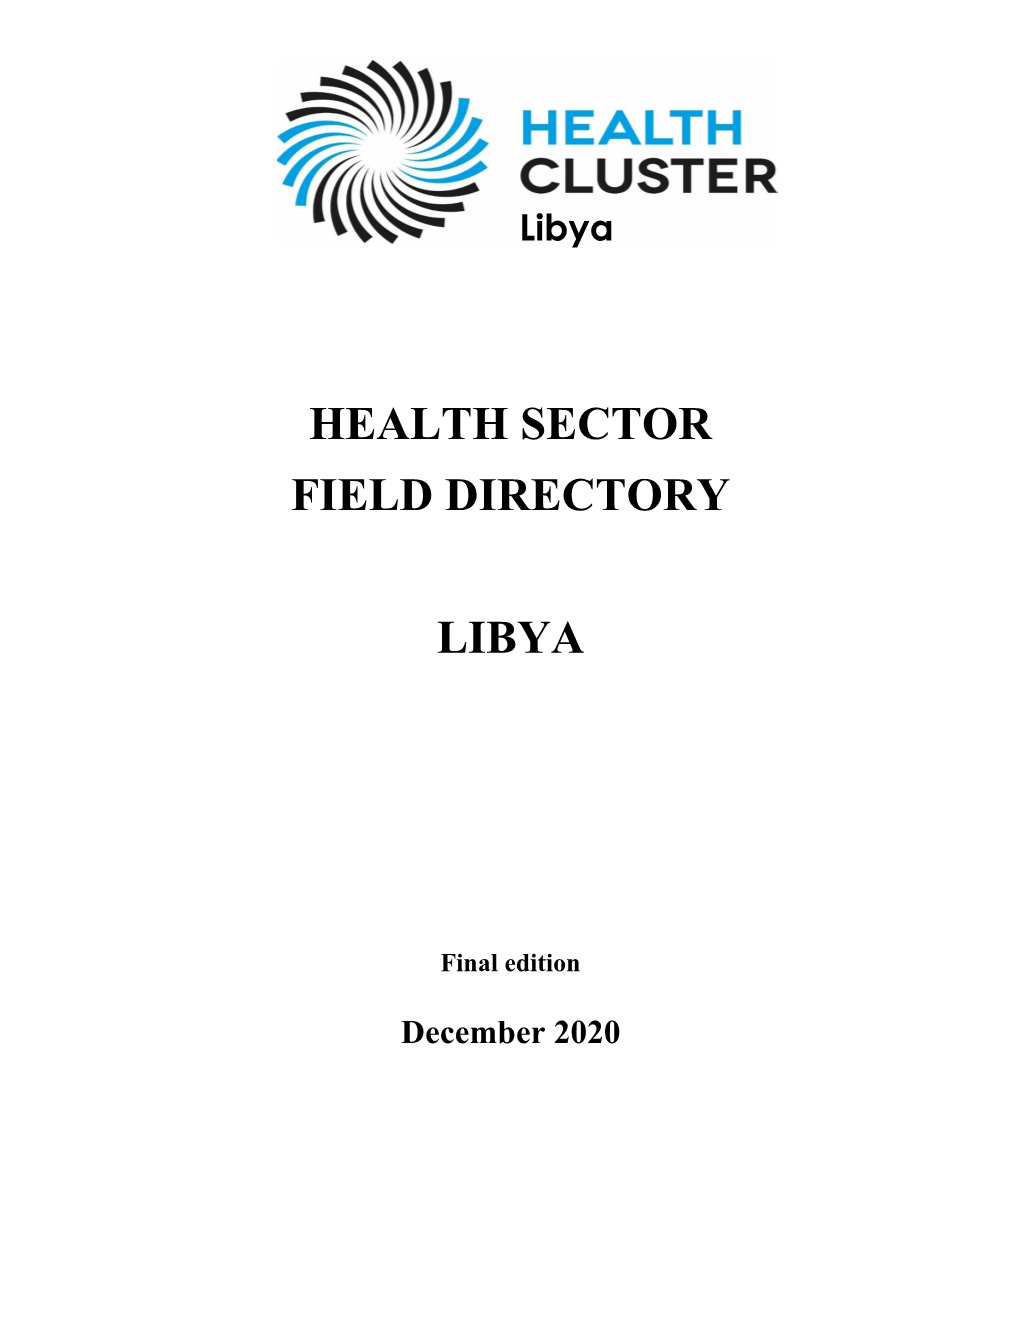 Health Sector Field Directory Libya